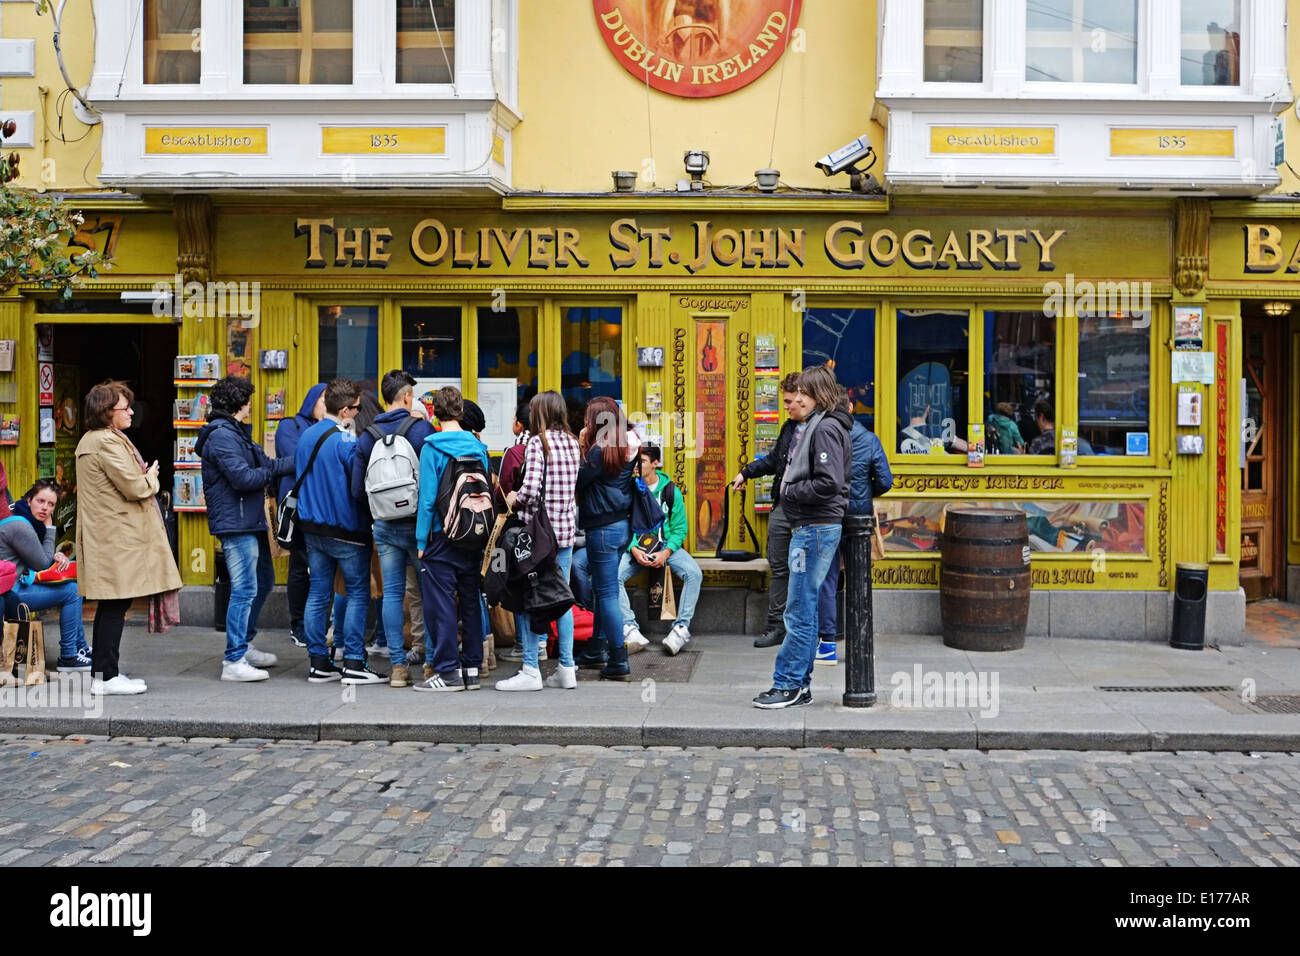 Oliver St. John Gogarty's Pub Dublin Stock Photo